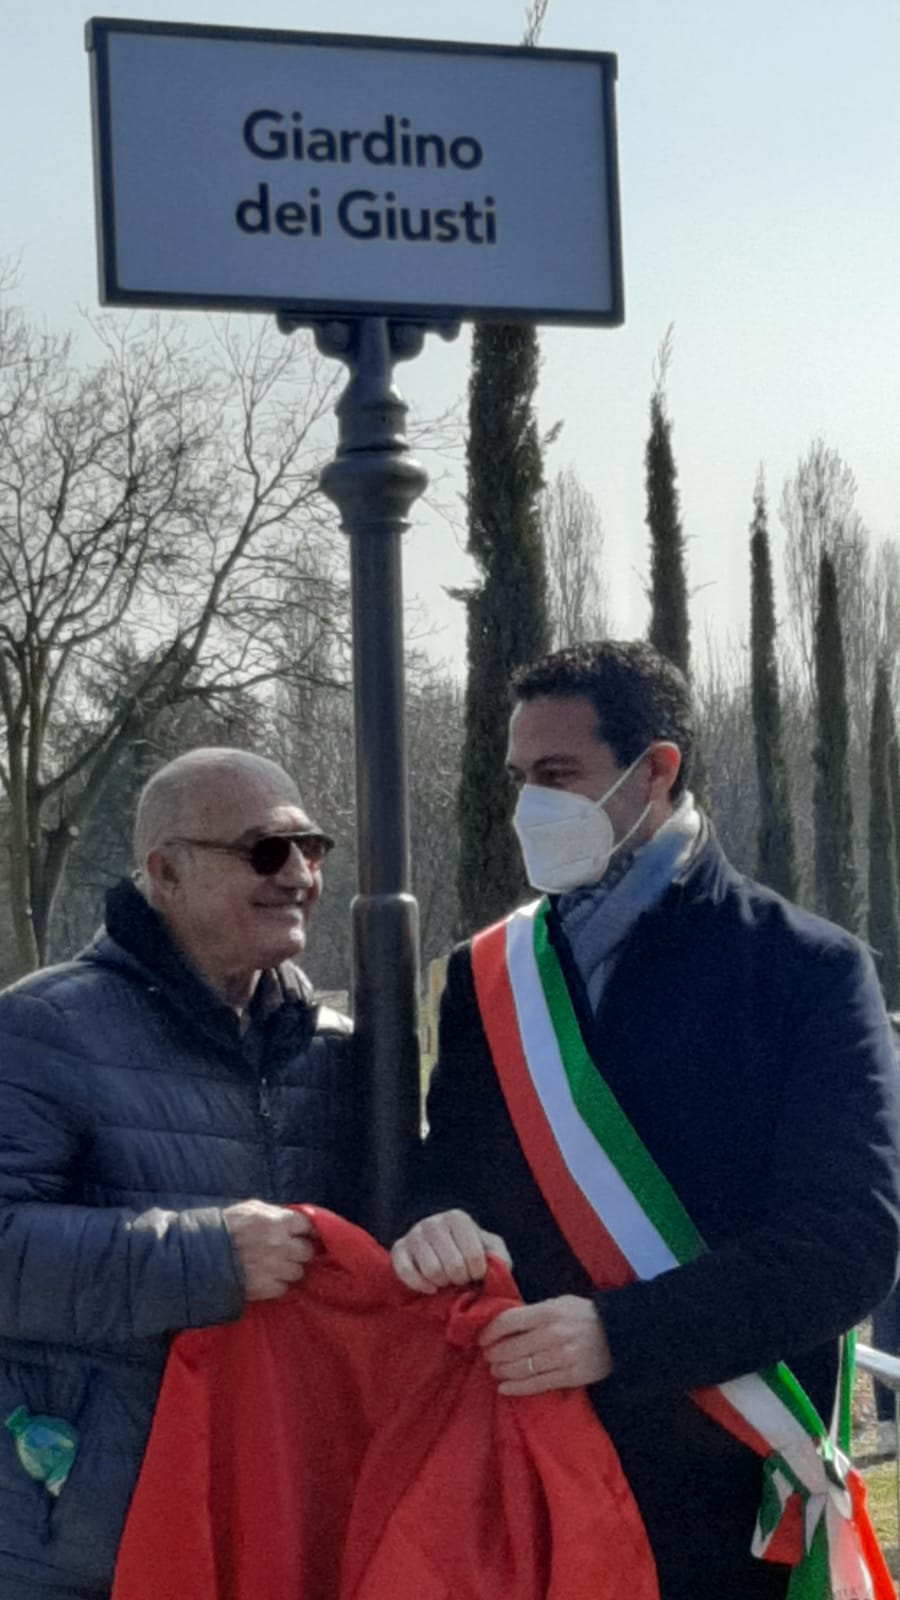 Vito Fiorino and the Mayor